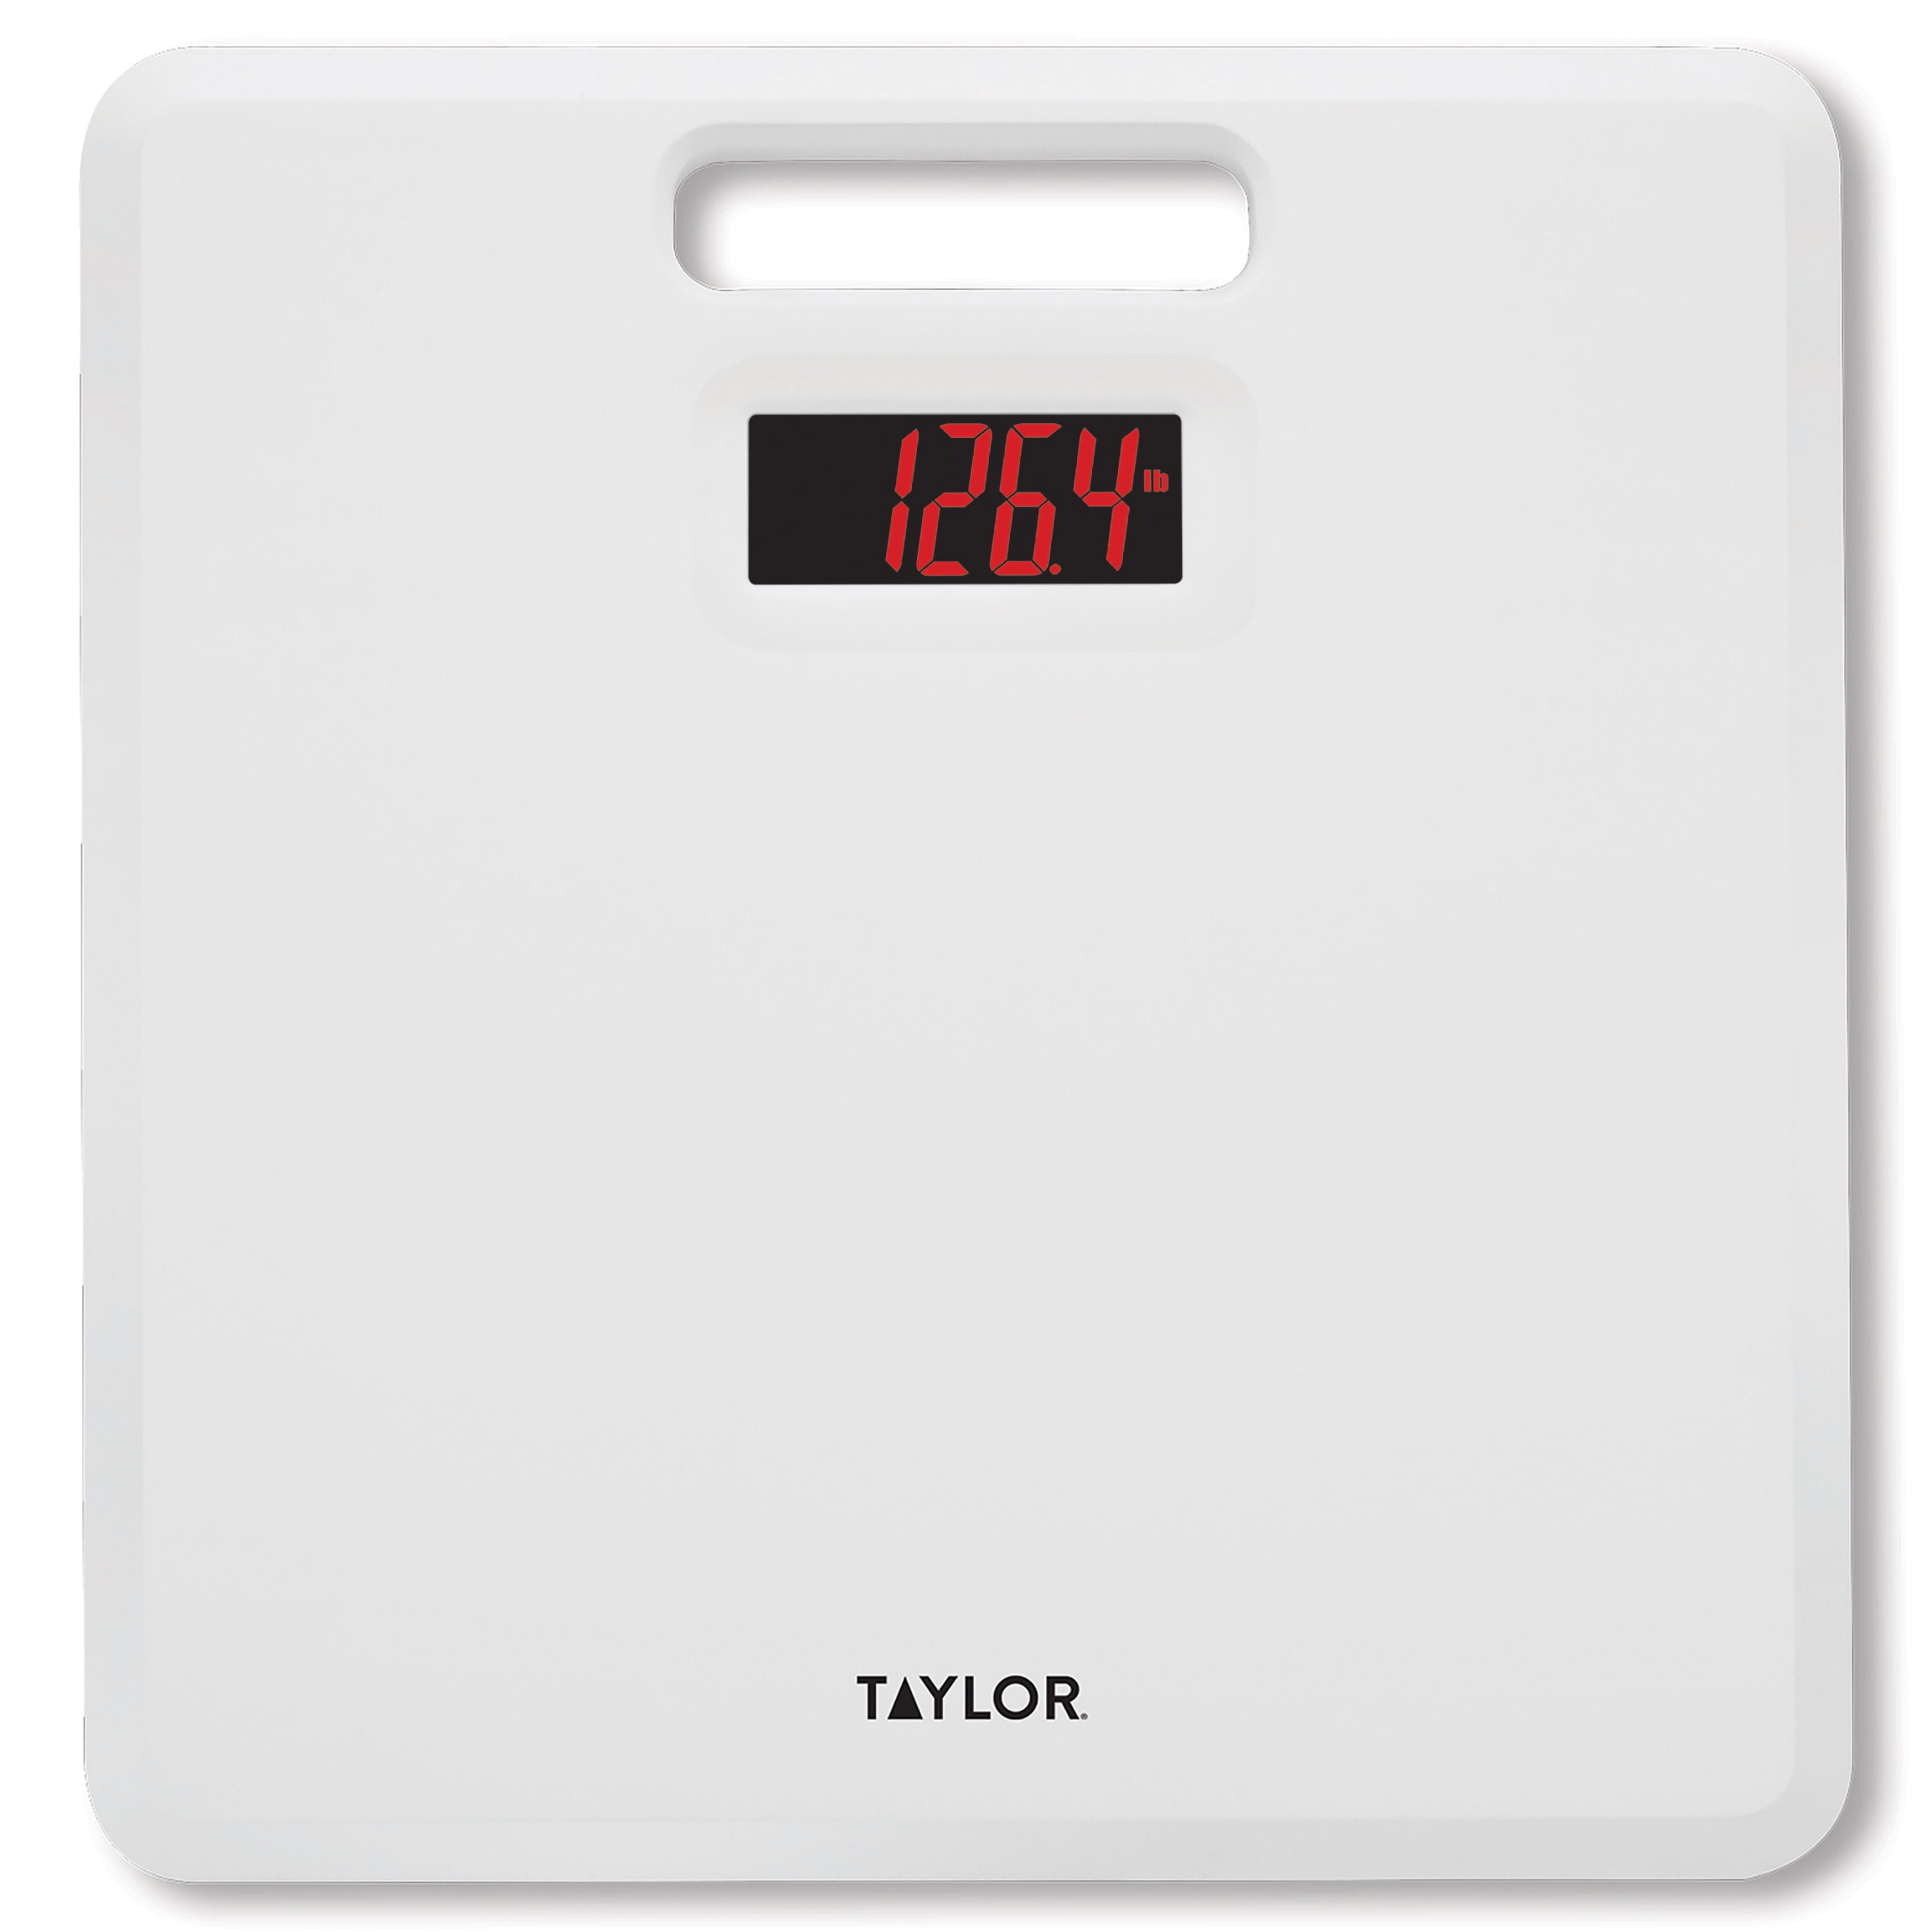 Etekcity Digital Body Weight Bathroom Scale With Step-On Technology 400 Lb 